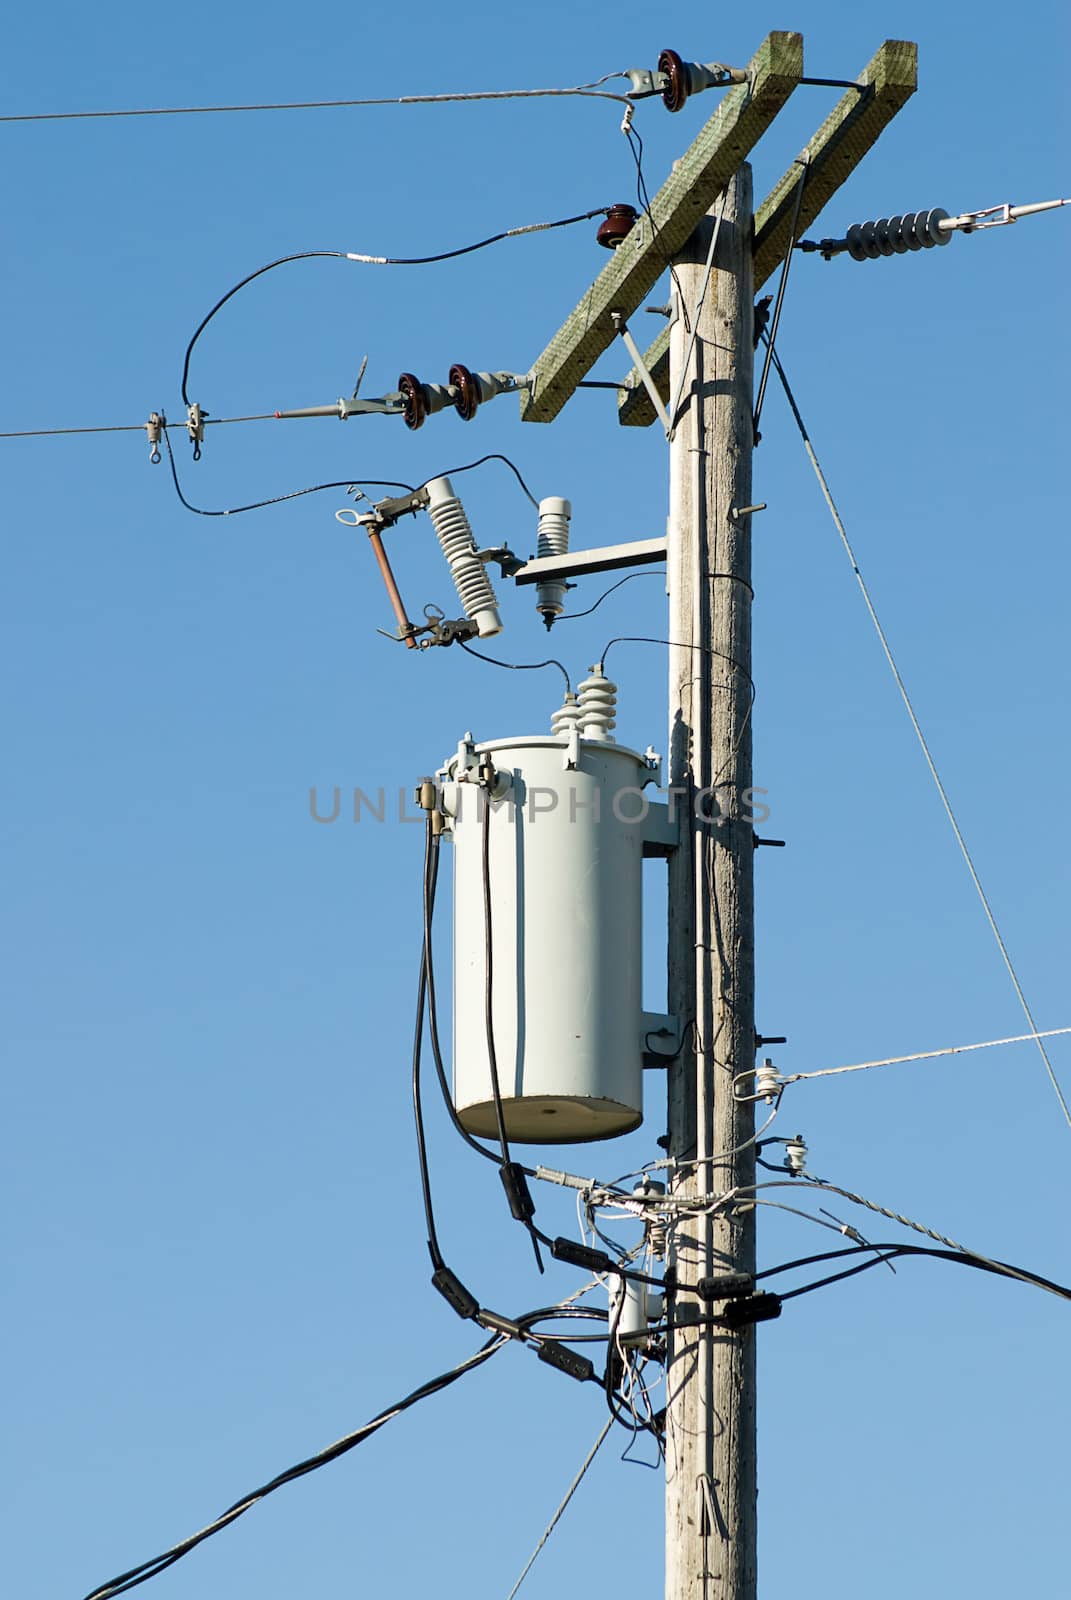 A transformer on a powerline pole shot against a blue sky